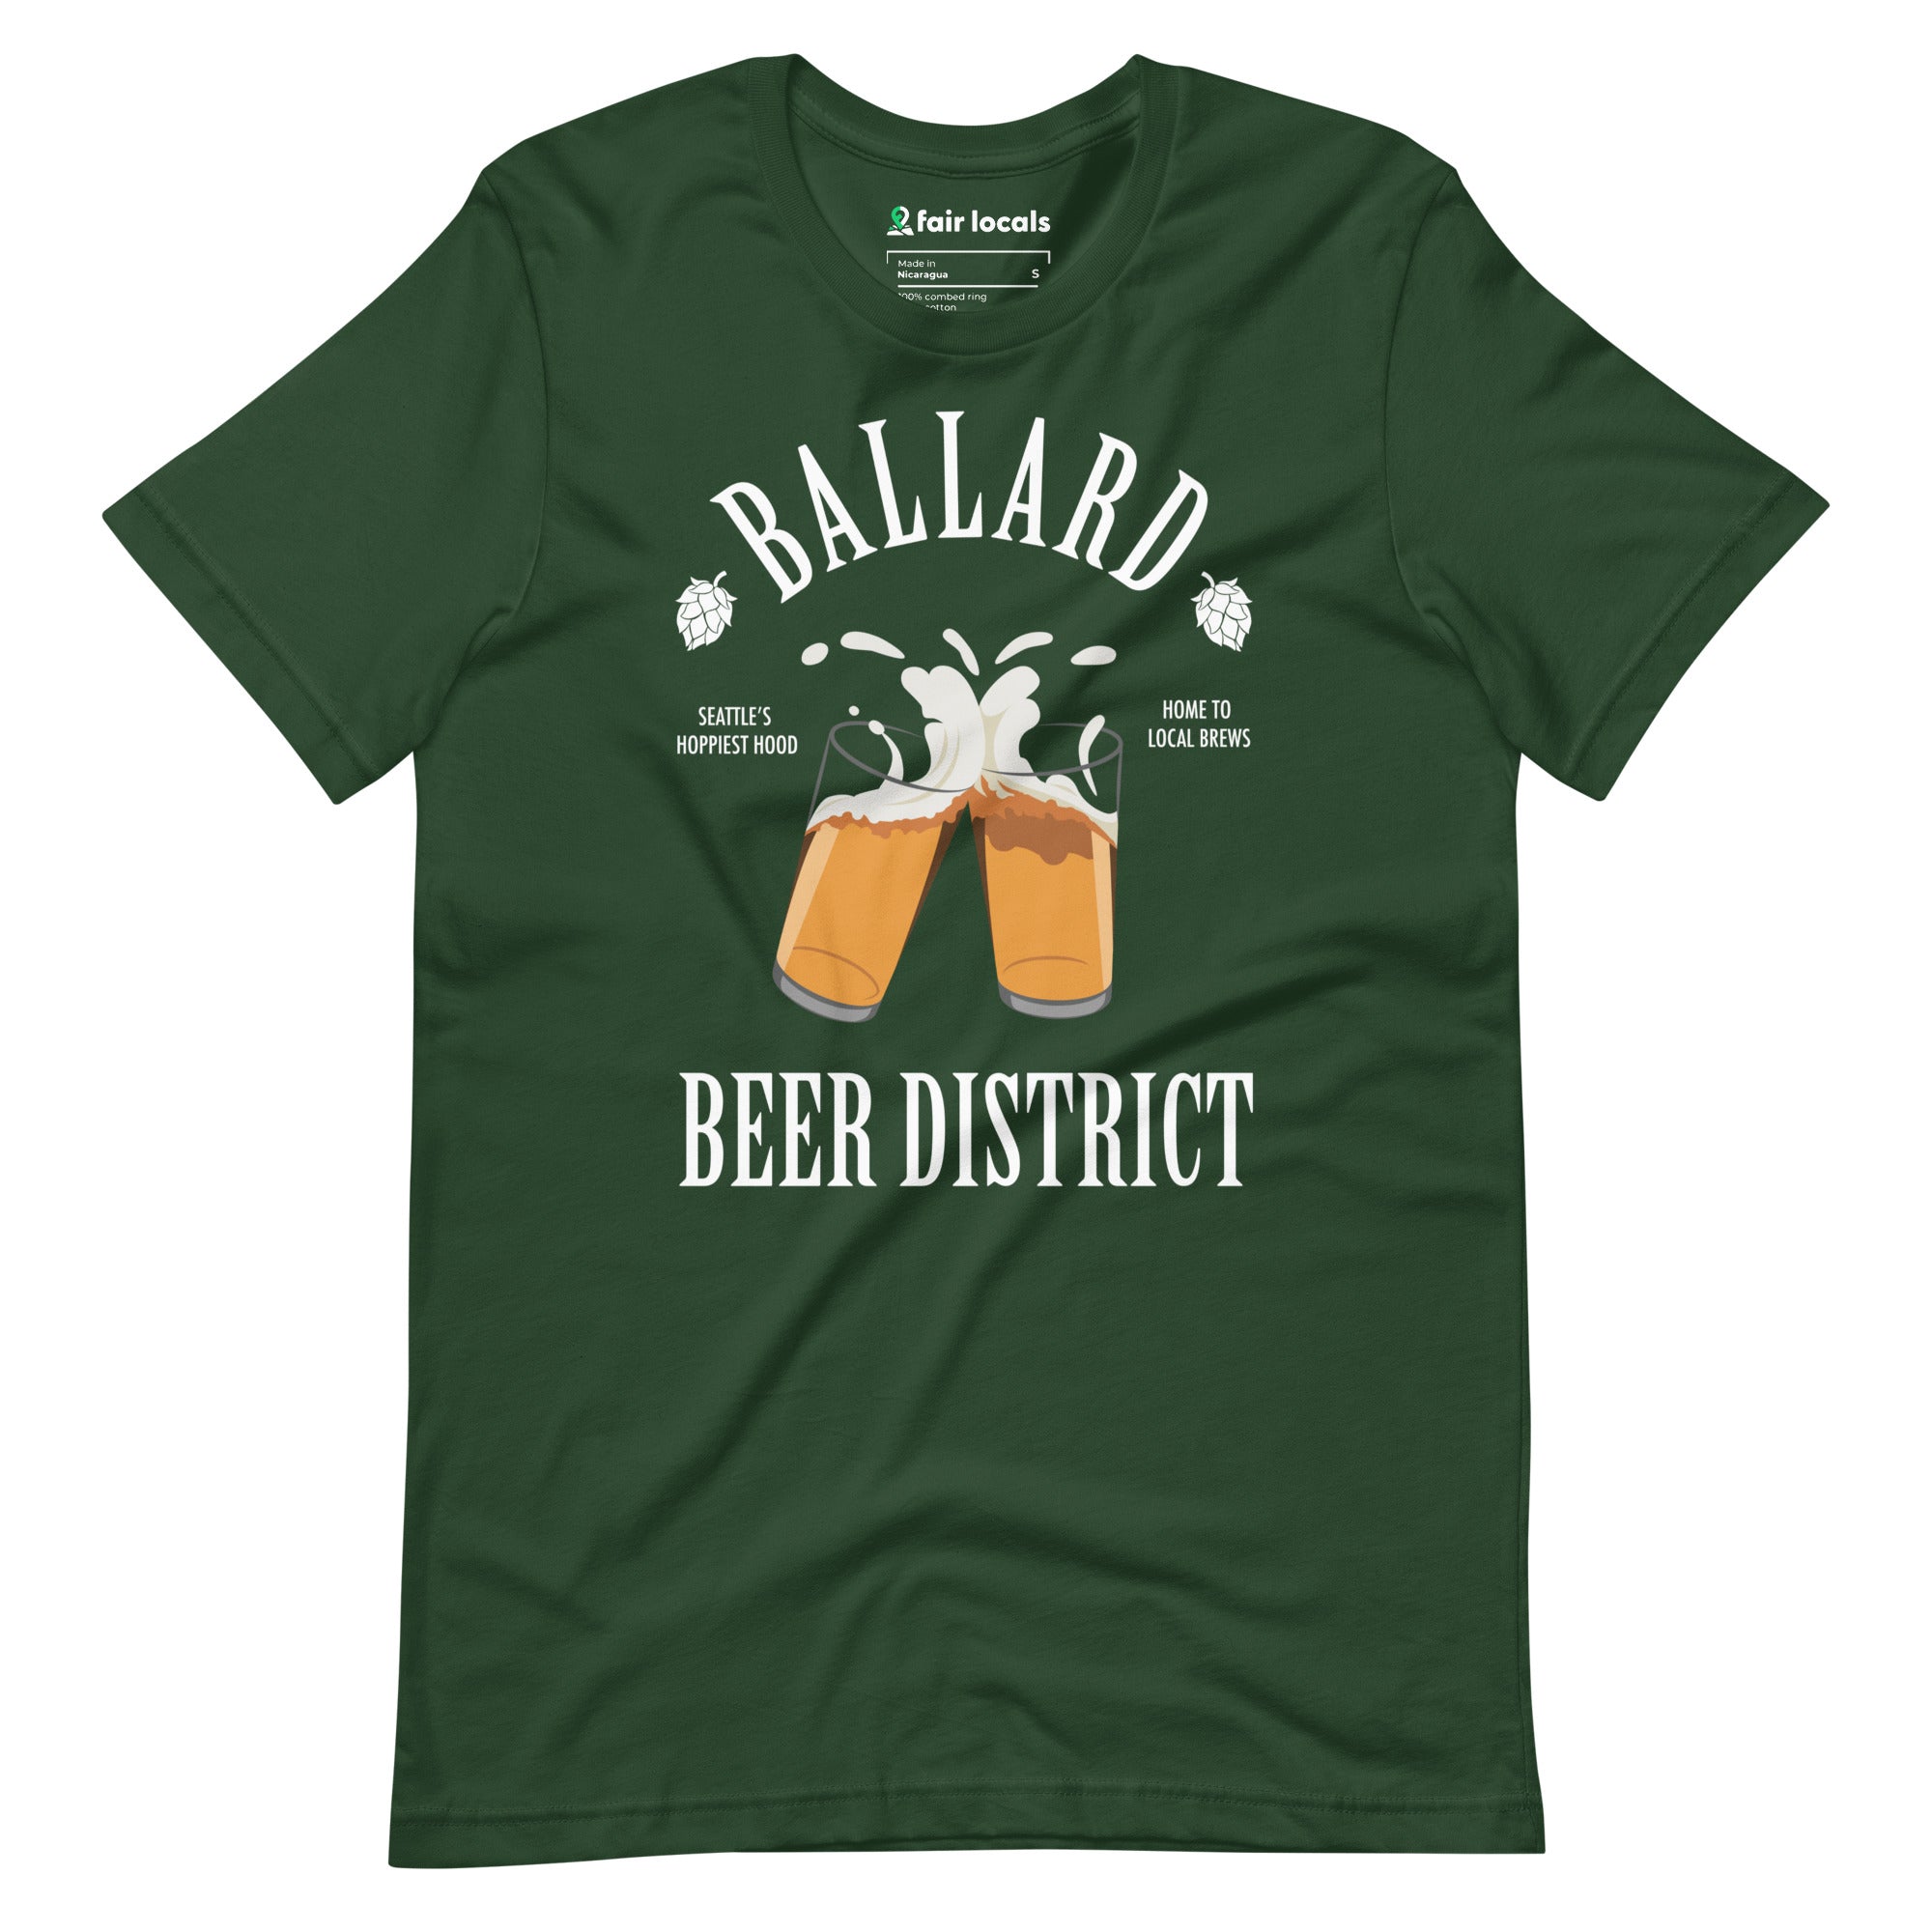 Beer District T-Shirt - Ballard | Seattle, WA